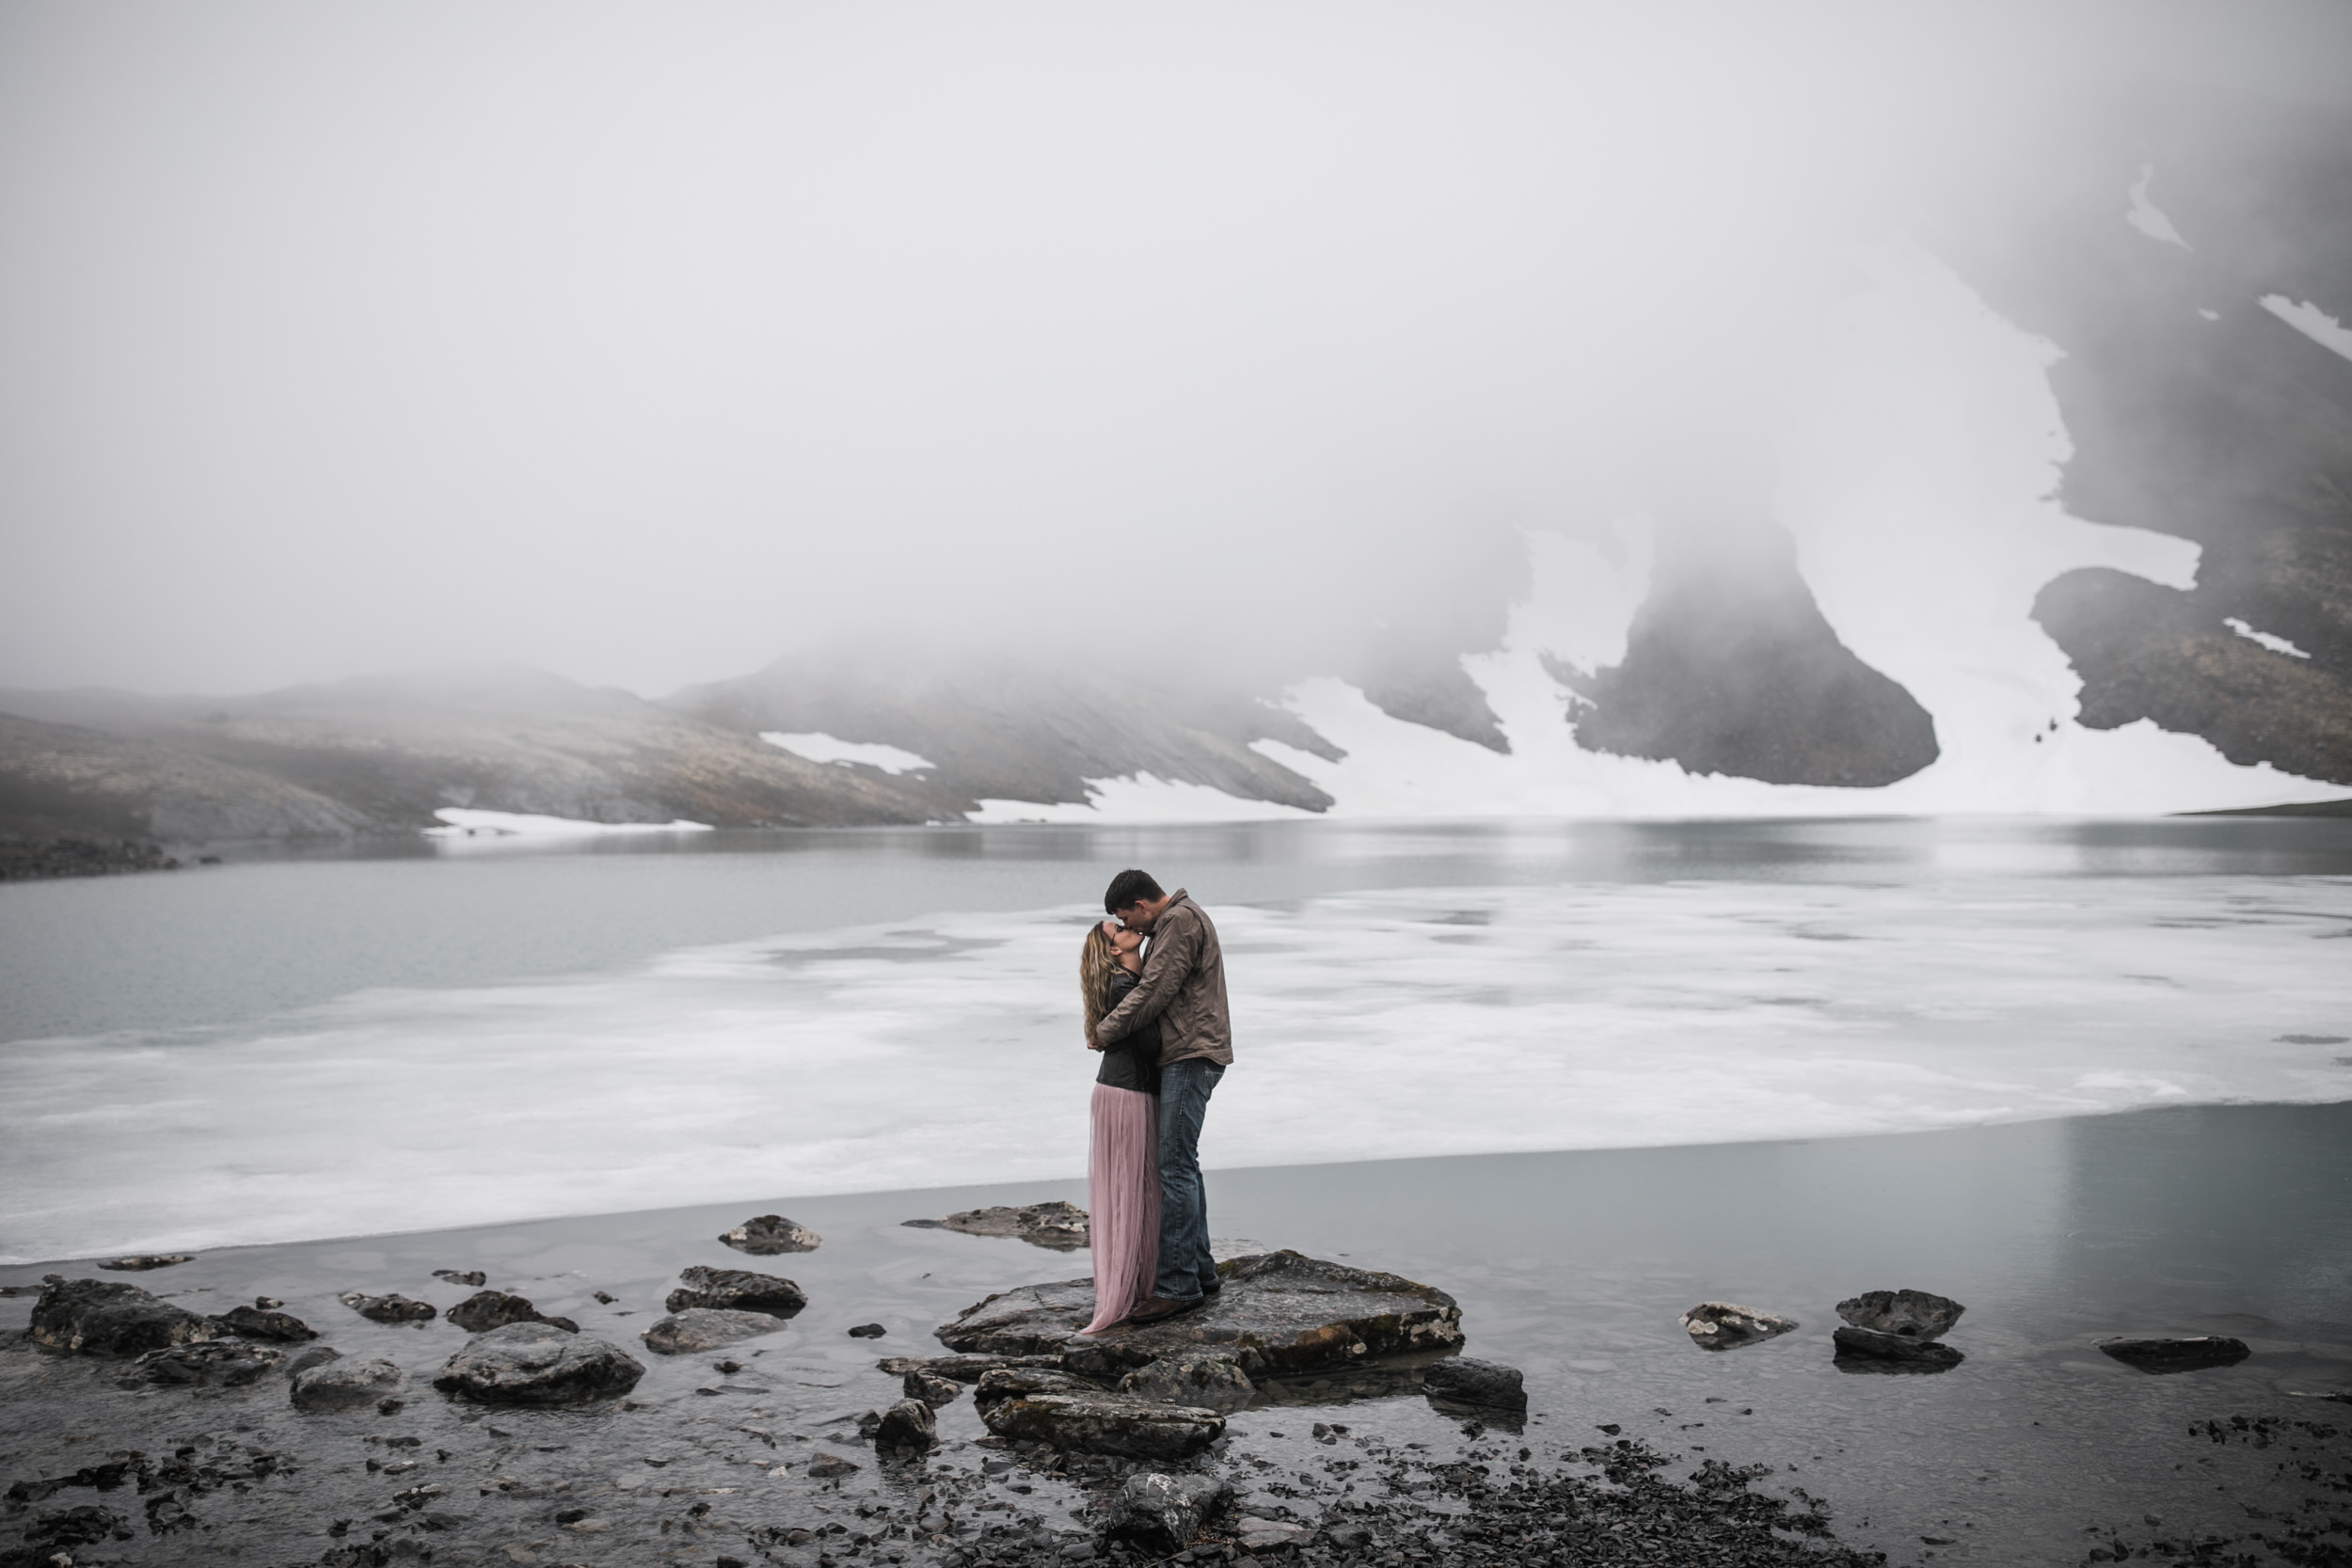 adventure engagement session in alaska | alyeska, girdwood elopement photographer | alaska destination wedding photographer | the hearnes adventure photography